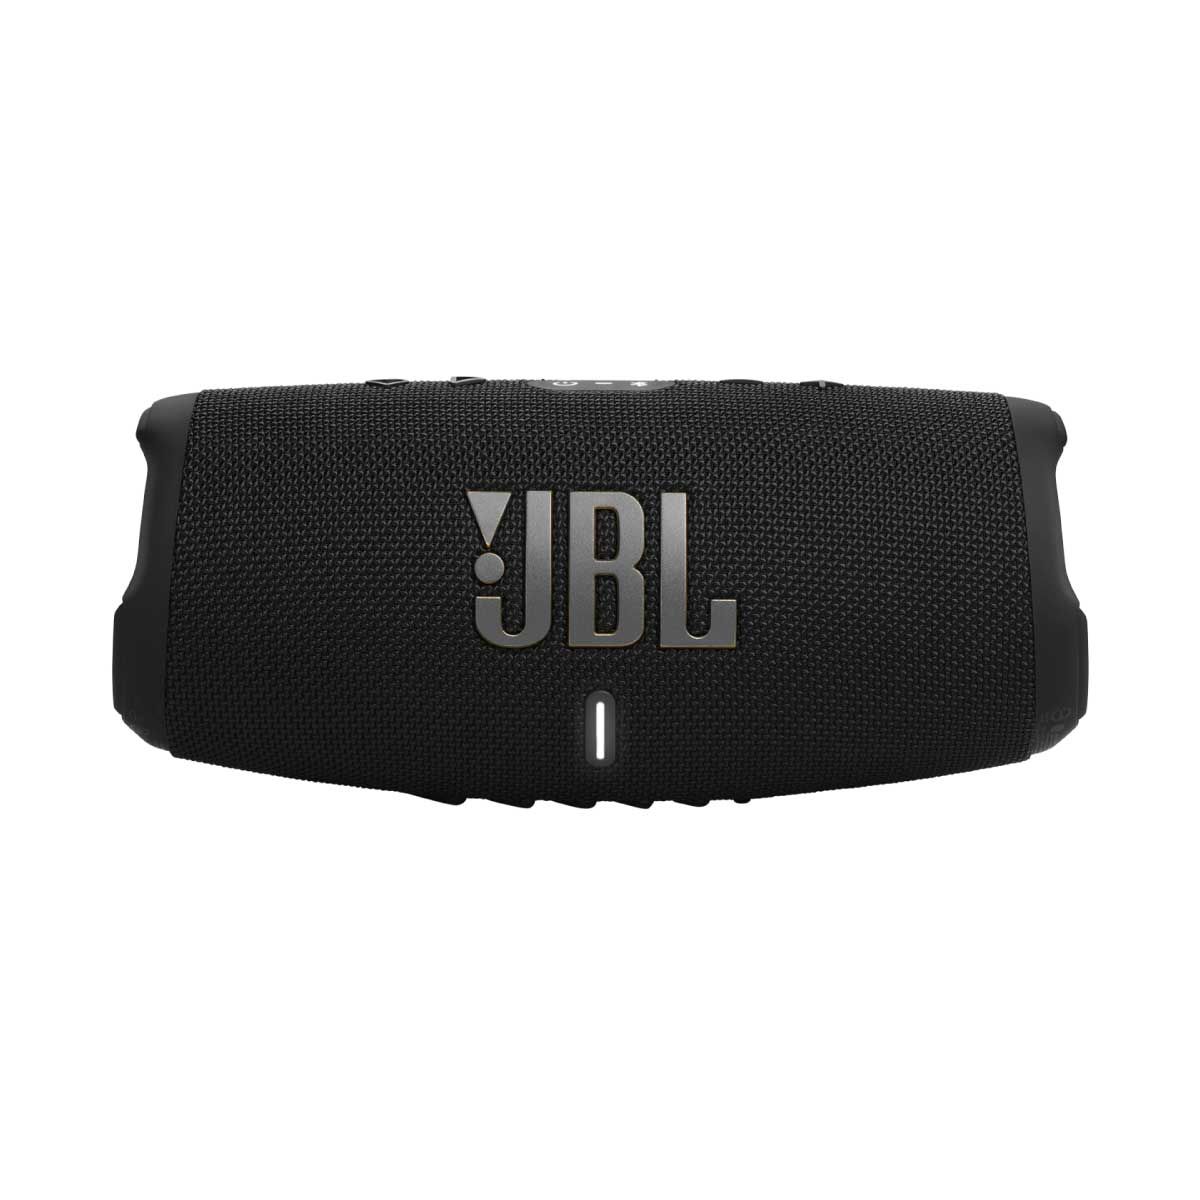 JBL ลำโพงพกพาบลูทูธและ Wi-Fi รุ่น CHARG5WFBK สีดำ Black กันน้ำ กันฝุ่น IP67